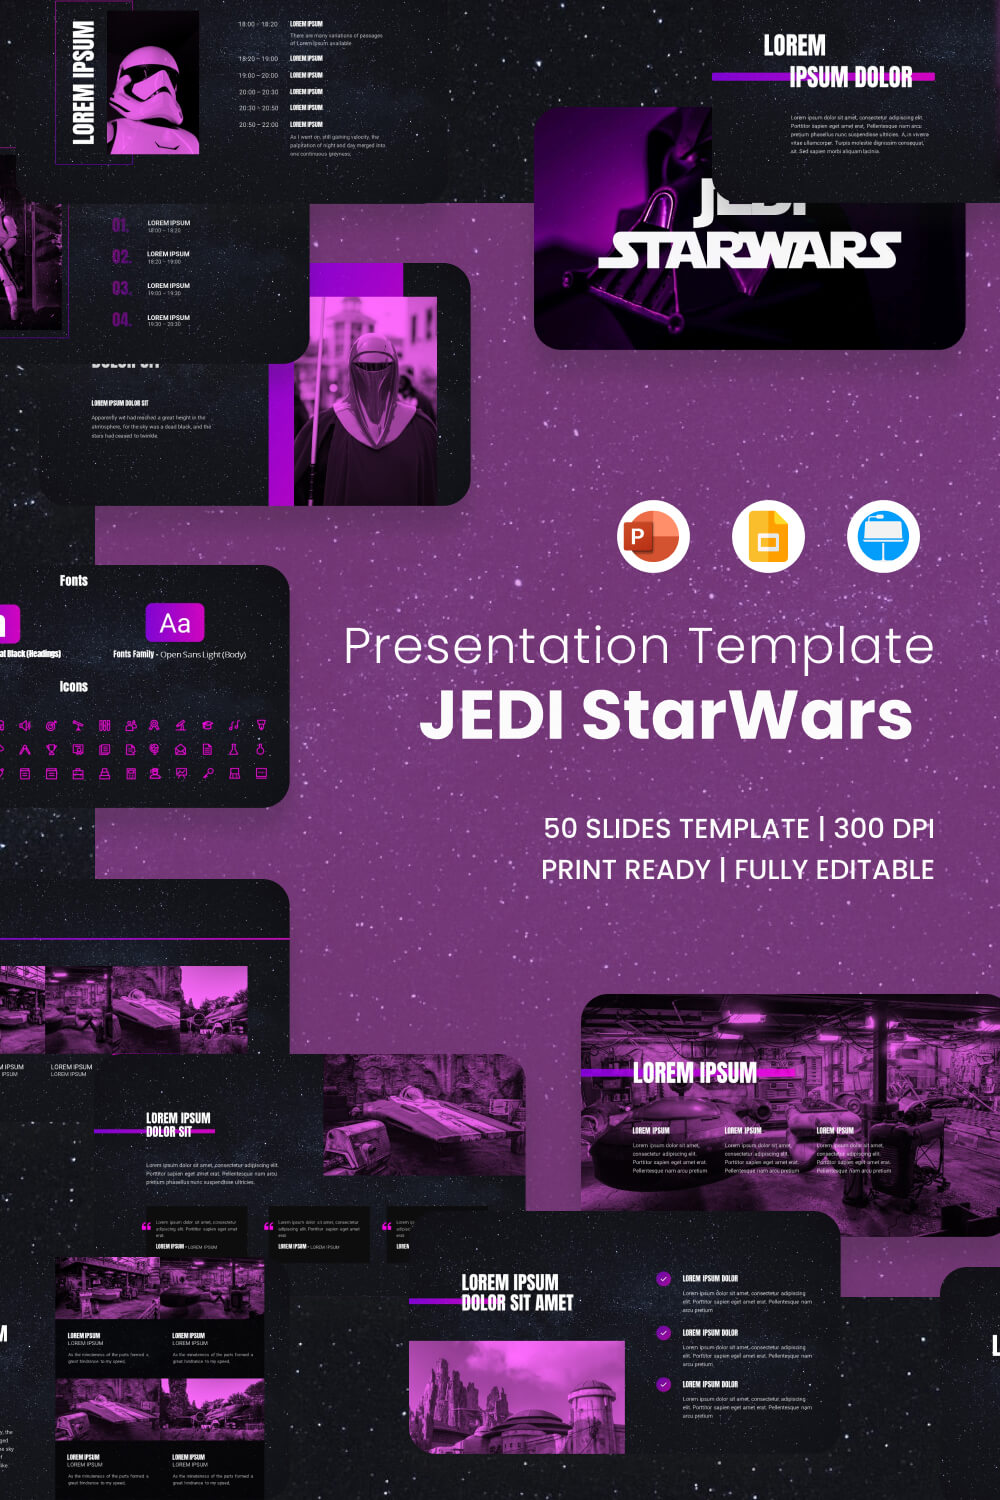 JEDI StarWars Presentation Template pinteerst image.